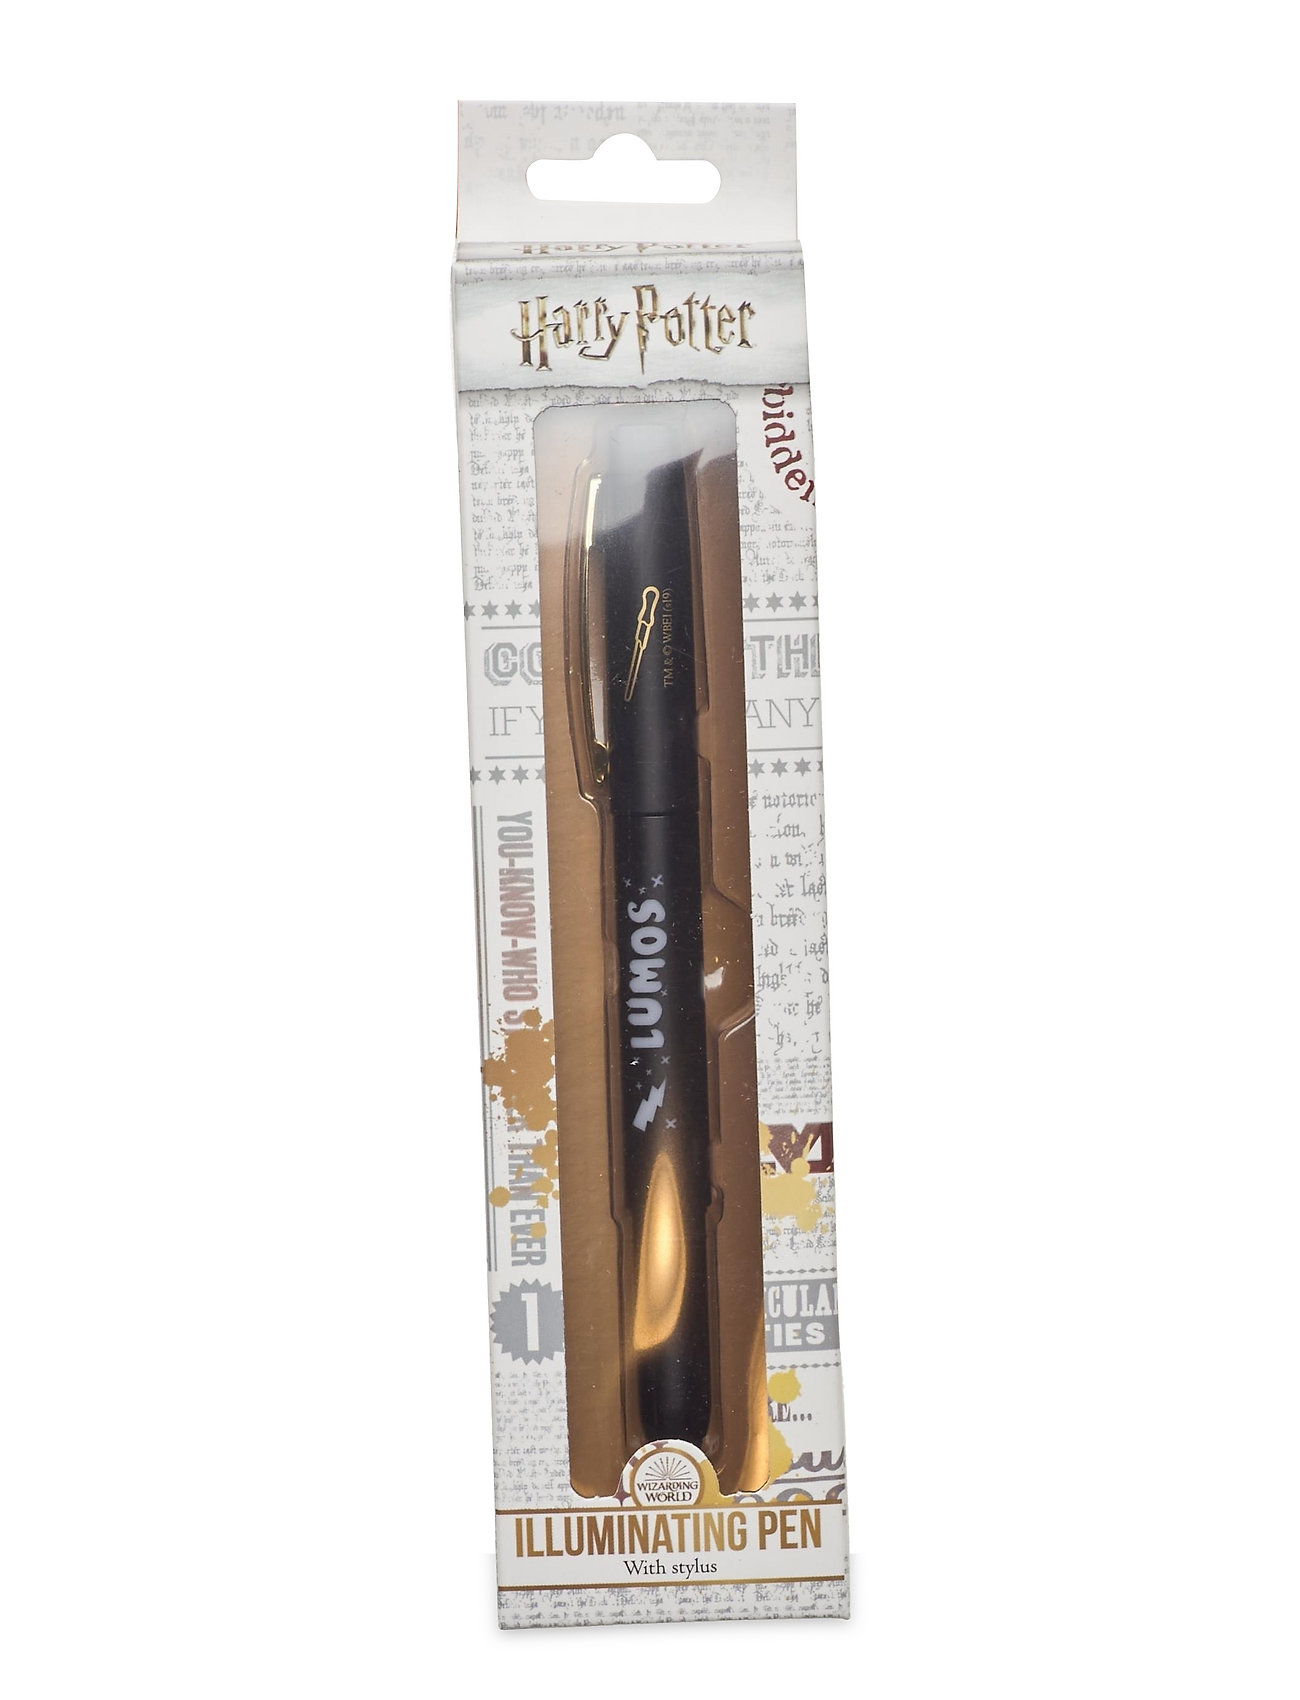 Harry Potter, Light Up Pen / Illumination Pen Toys Creativity Drawing & Crafts Drawing Stati Ry Svart Harry Potter